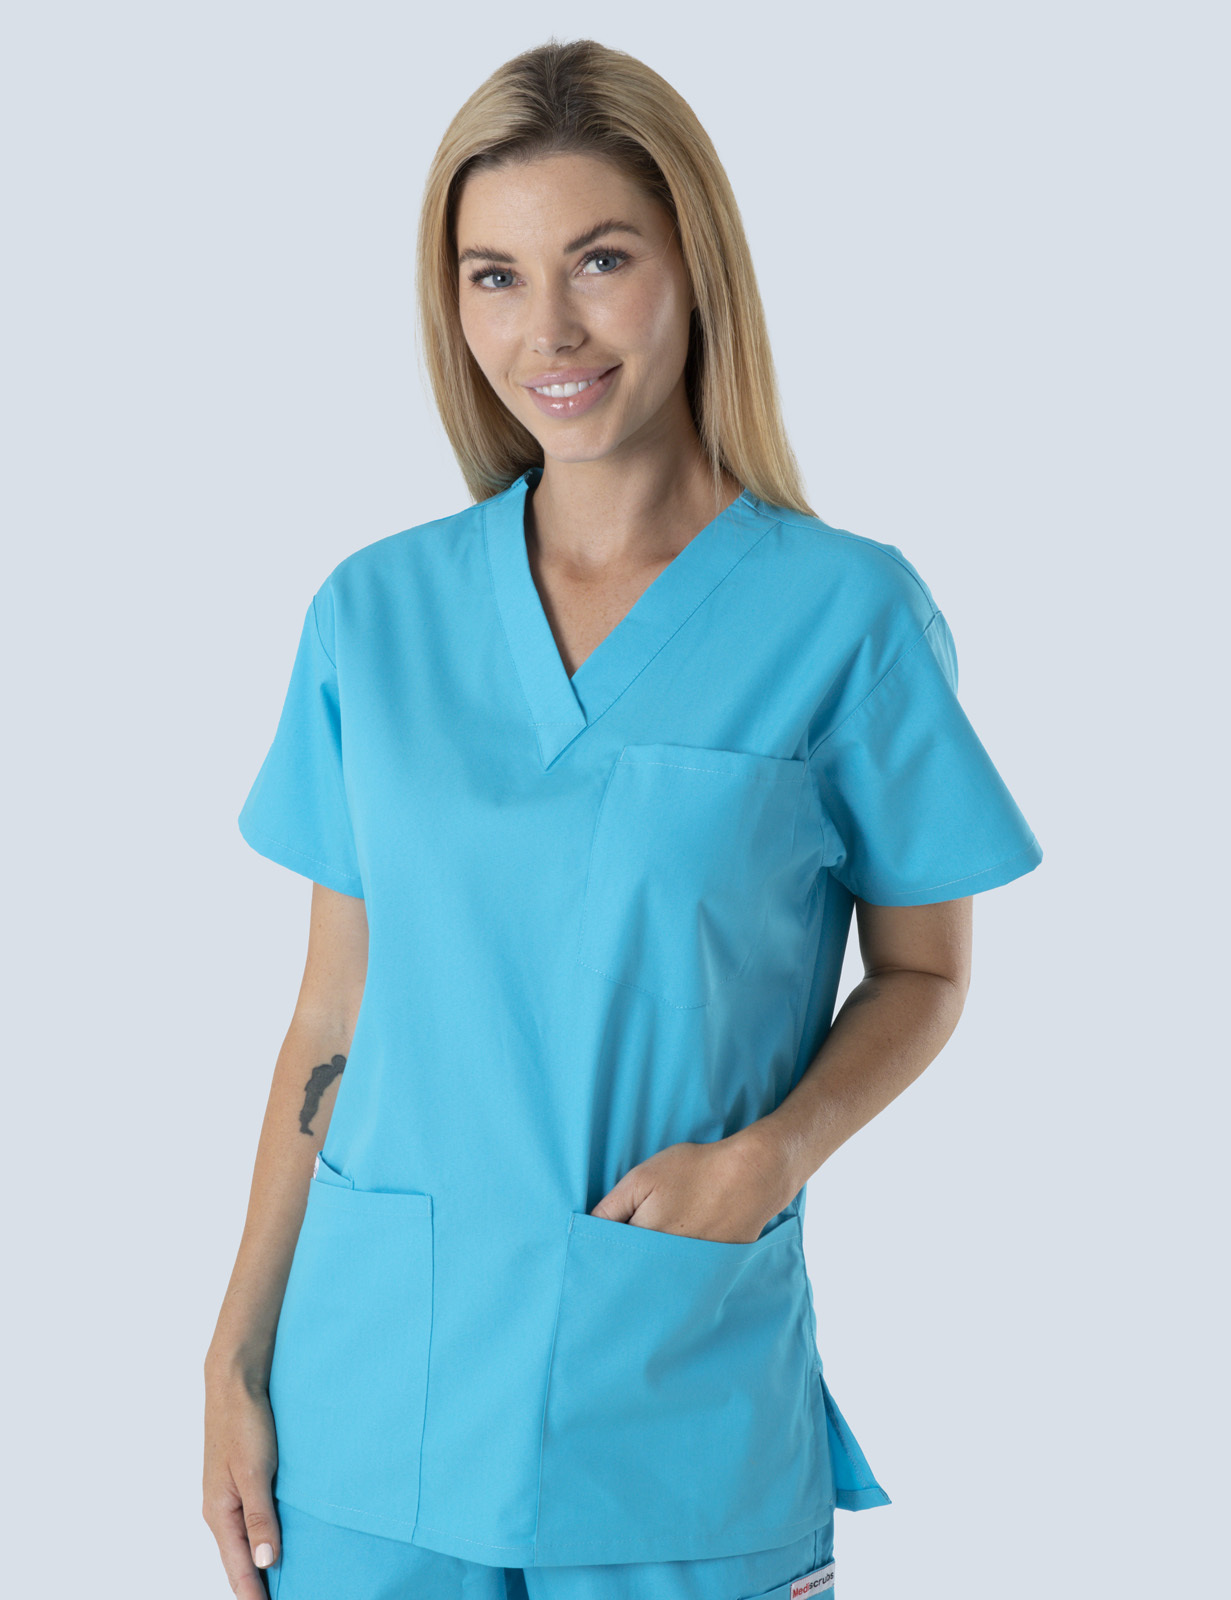 Queensland Children's Hospital Emergency Department Enrolled Nurse Uniform Top Bundle  (4 Pocket Top  in Aqua incl Logos)